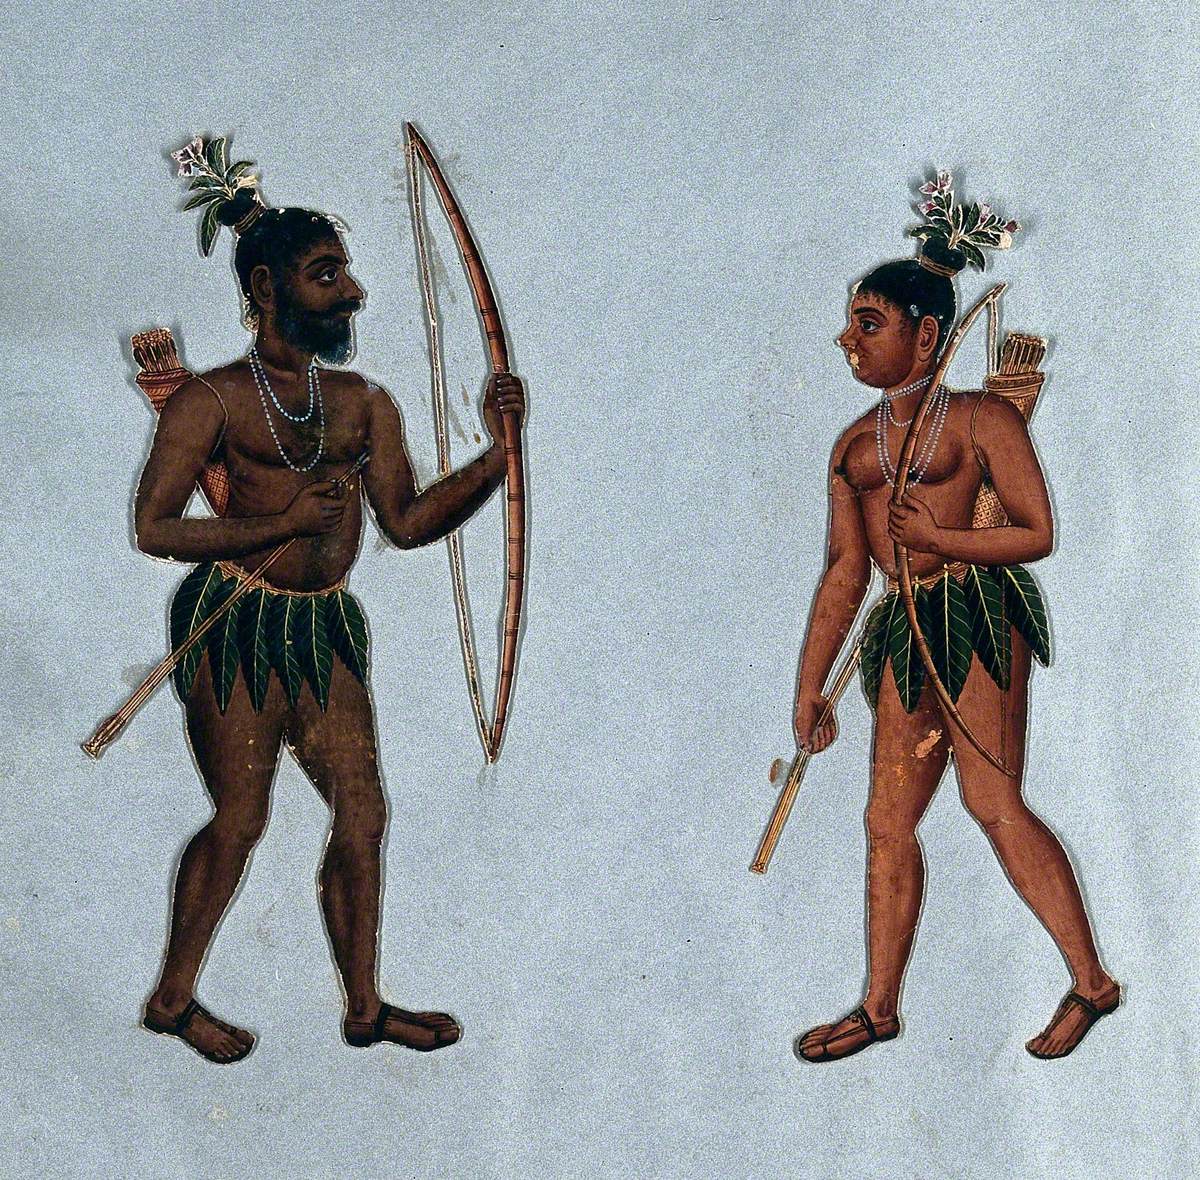 Two Tamil Men of the Kallar Caste